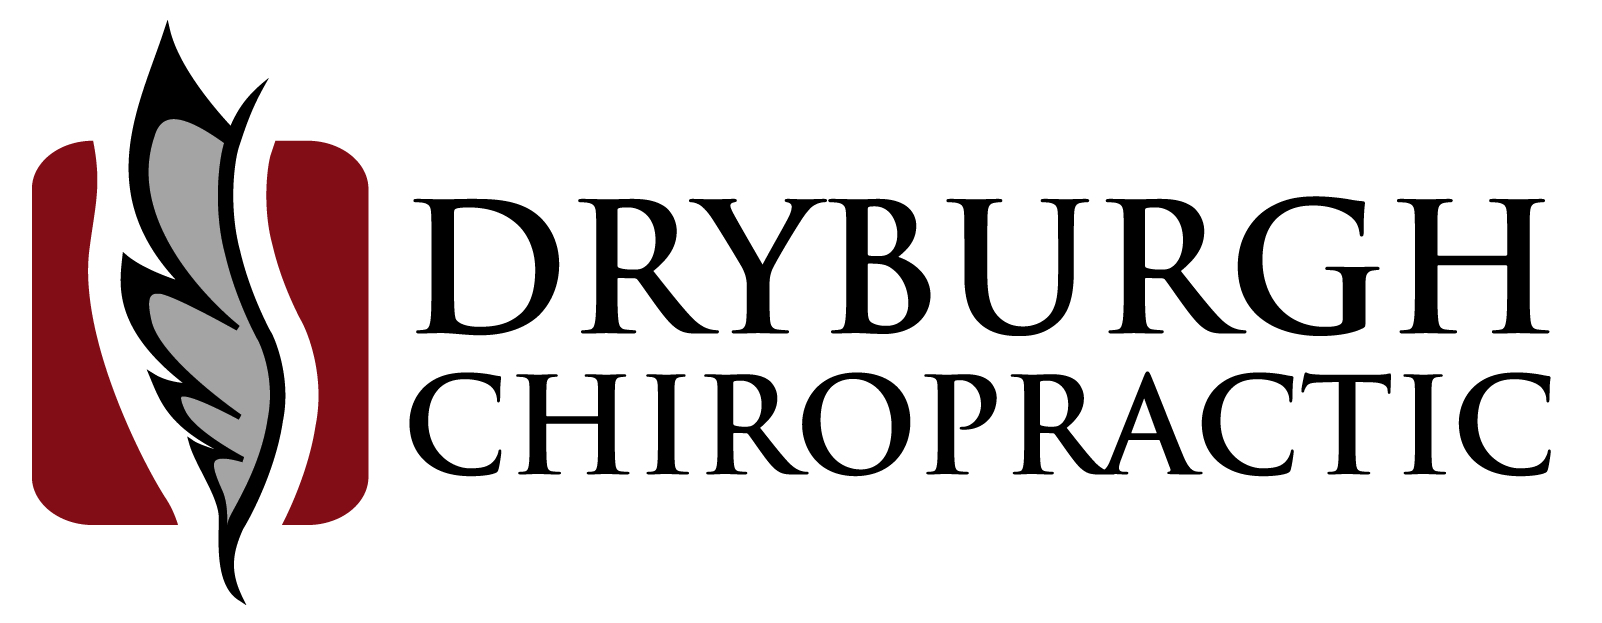 Dryburgh Chiropractic 